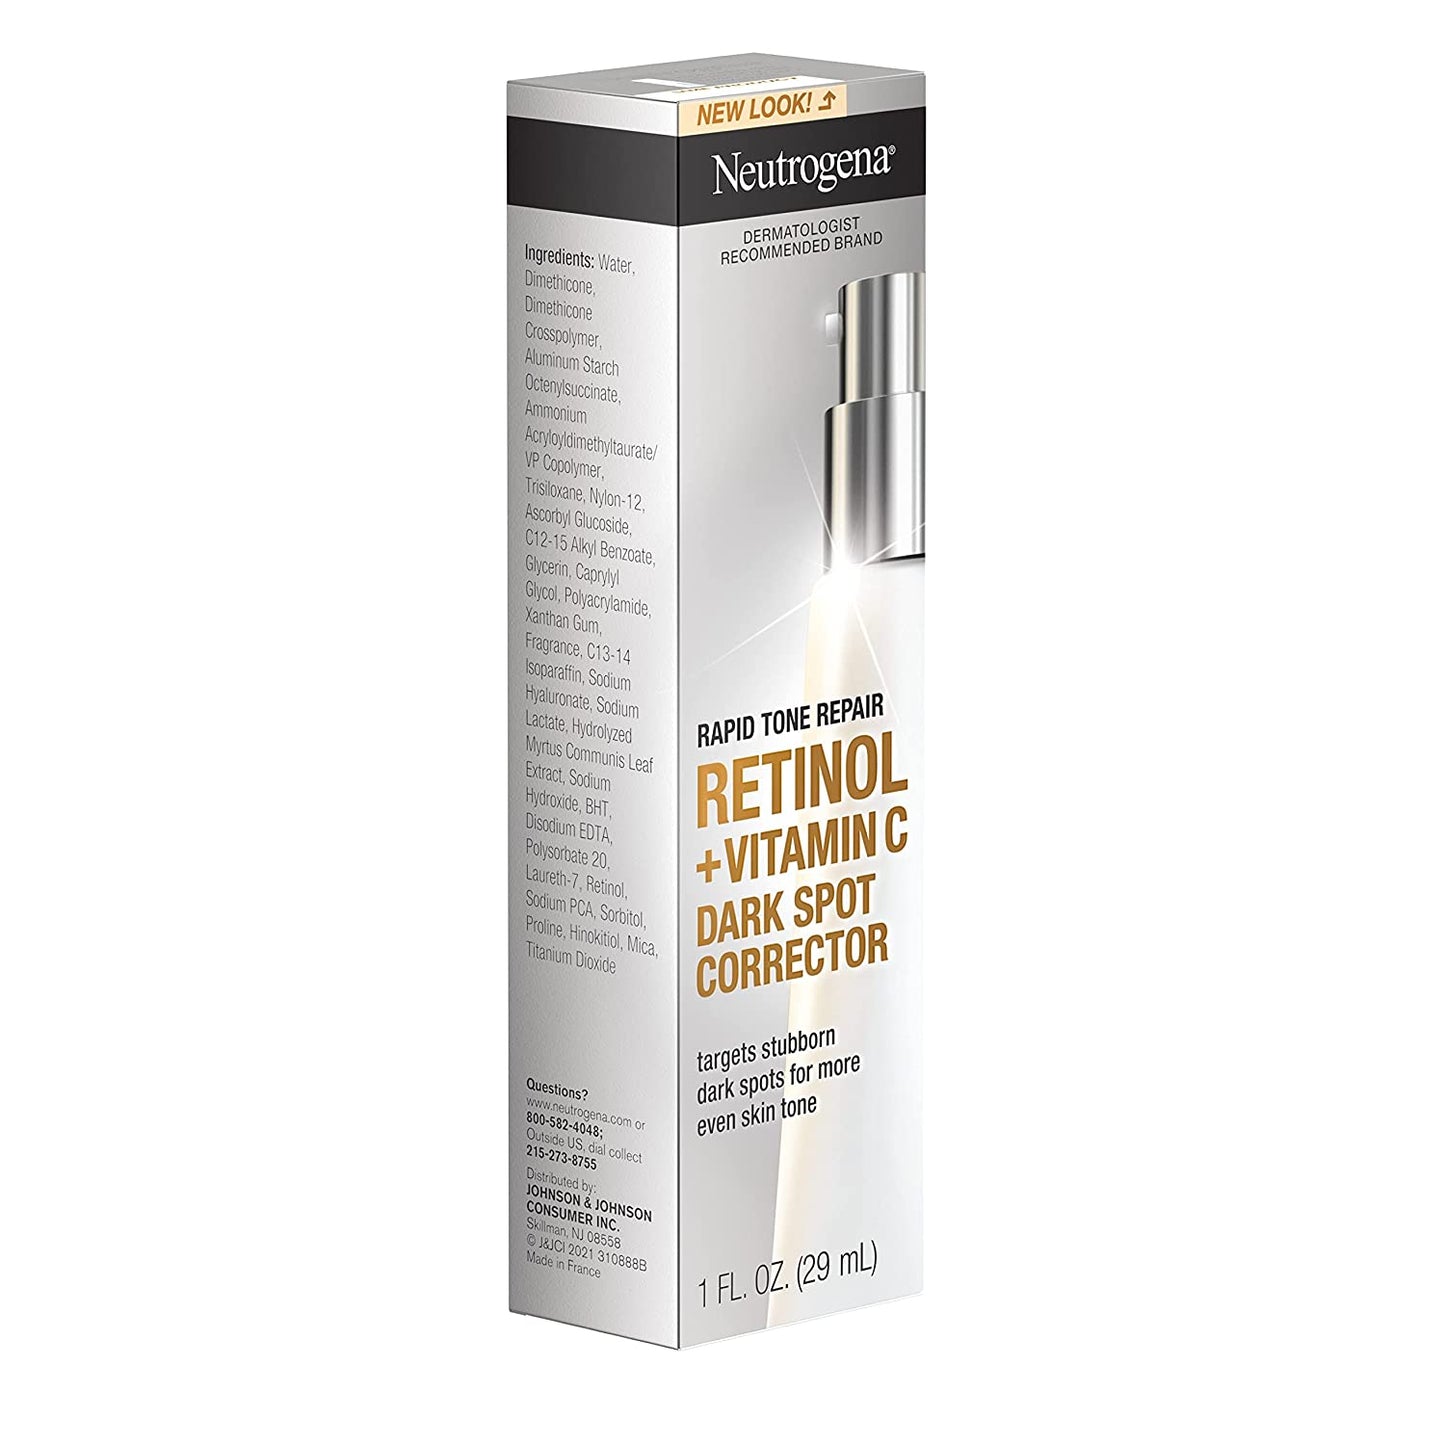 Neutrogena Rapid Tone Repair Retinol + Vitamin C Dark Spot Corrector Face Serum 1 fl oz/ 29ml